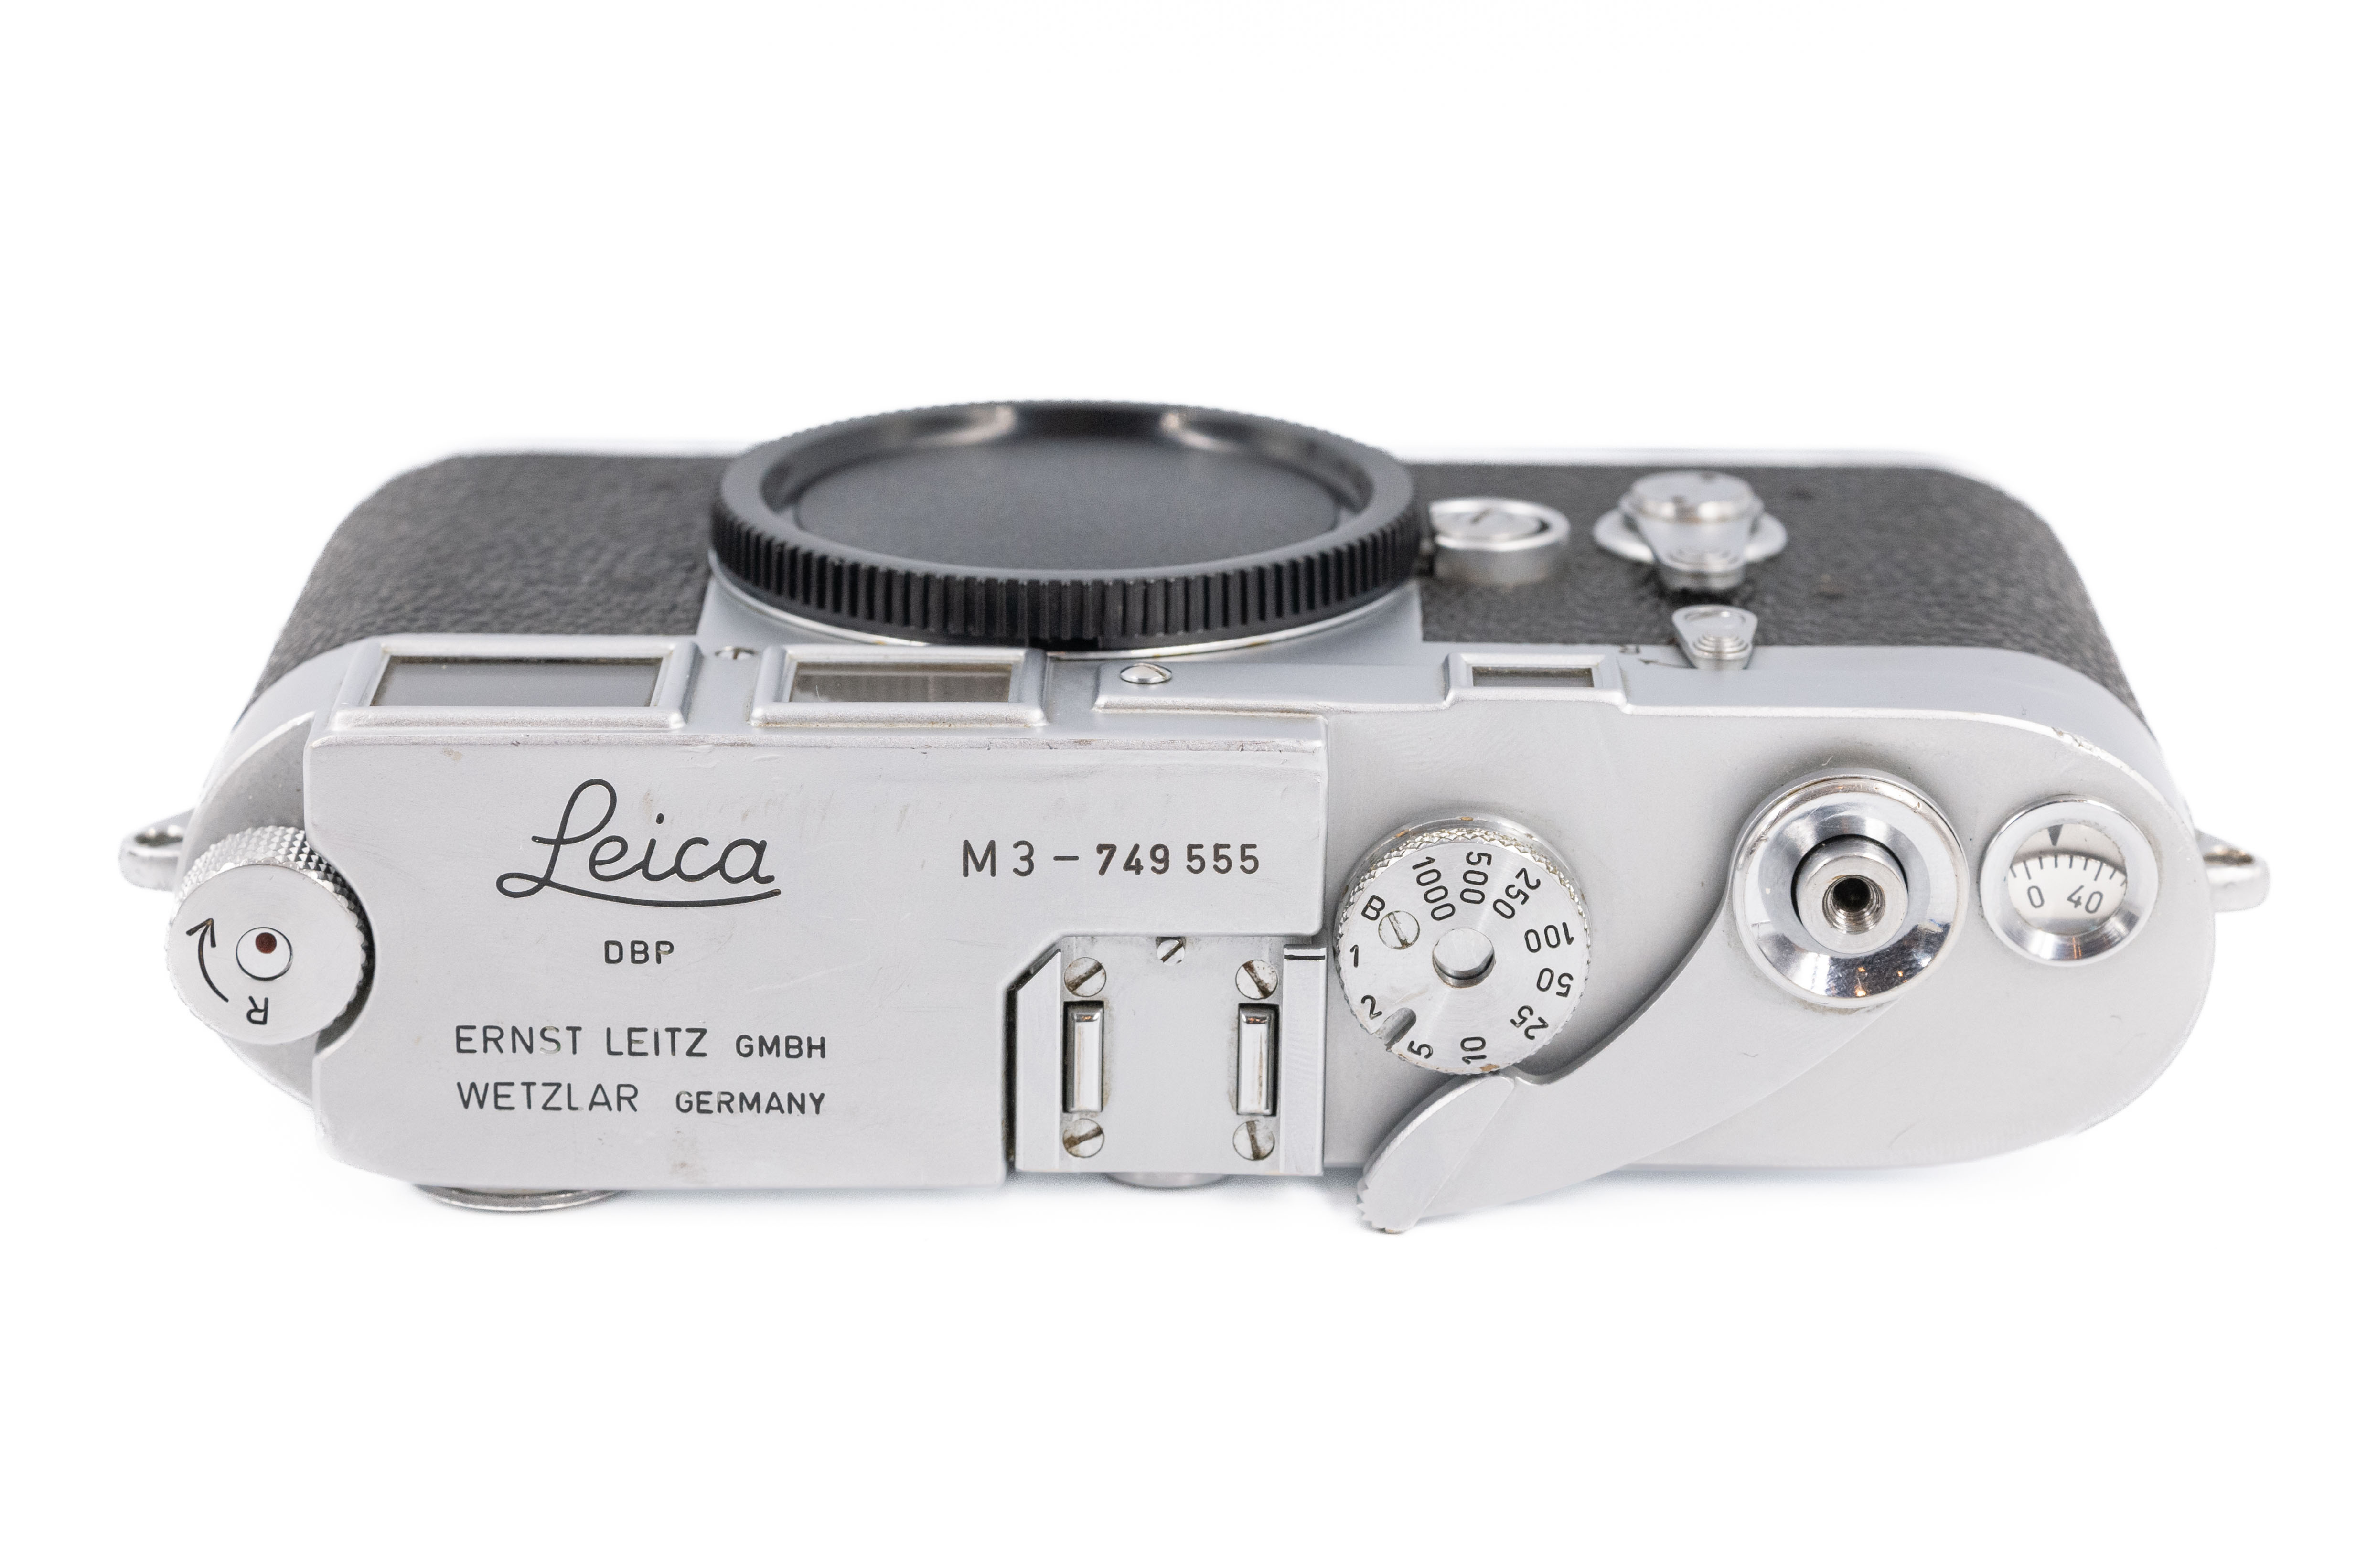 Leica M3 Chrome Double Stroke 10150